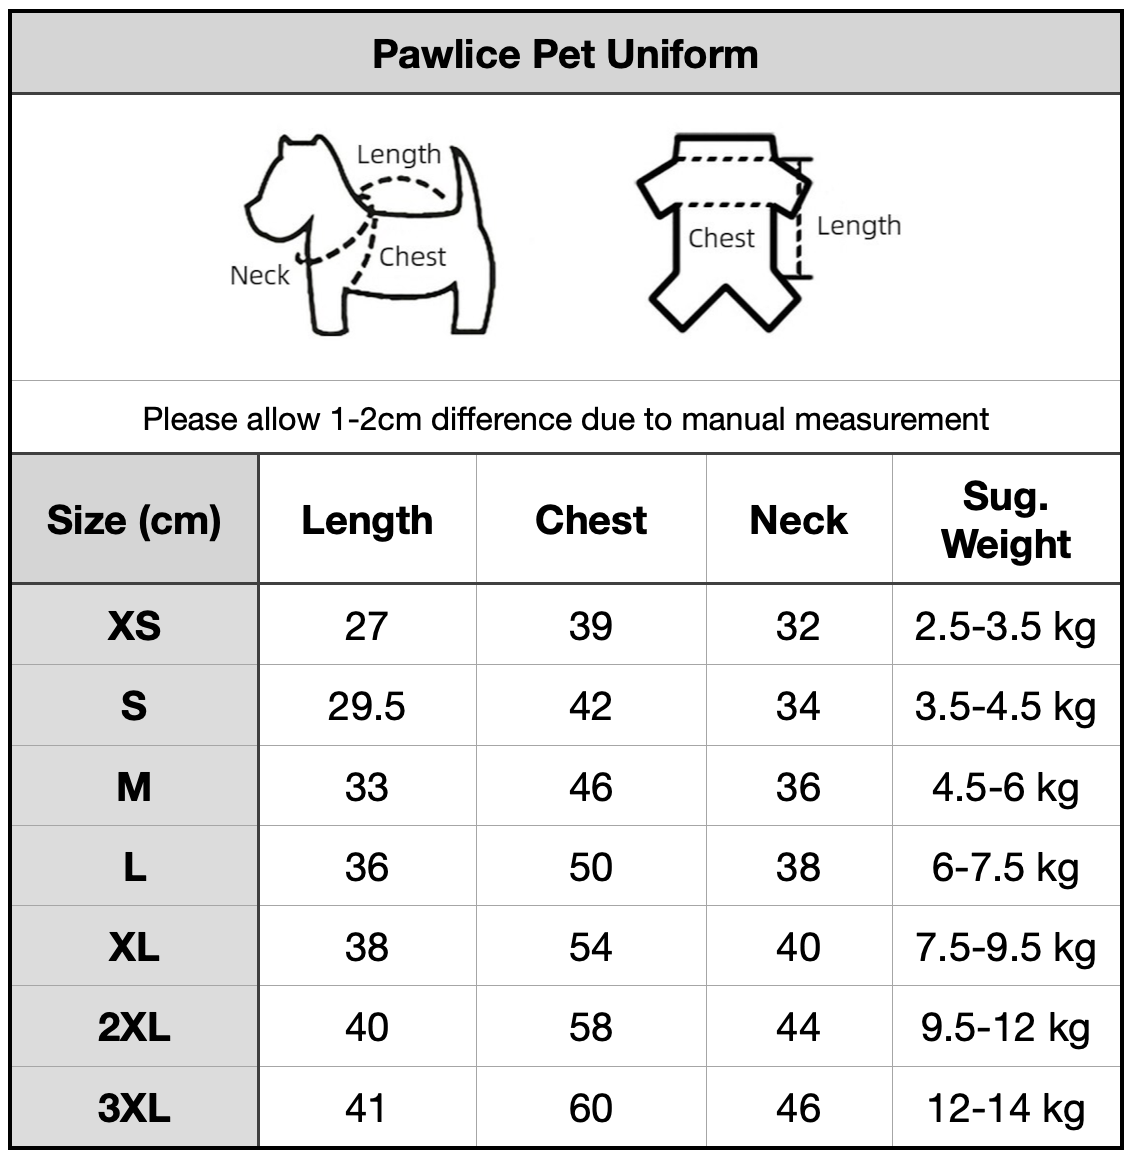 Pawlice Pet Uniform